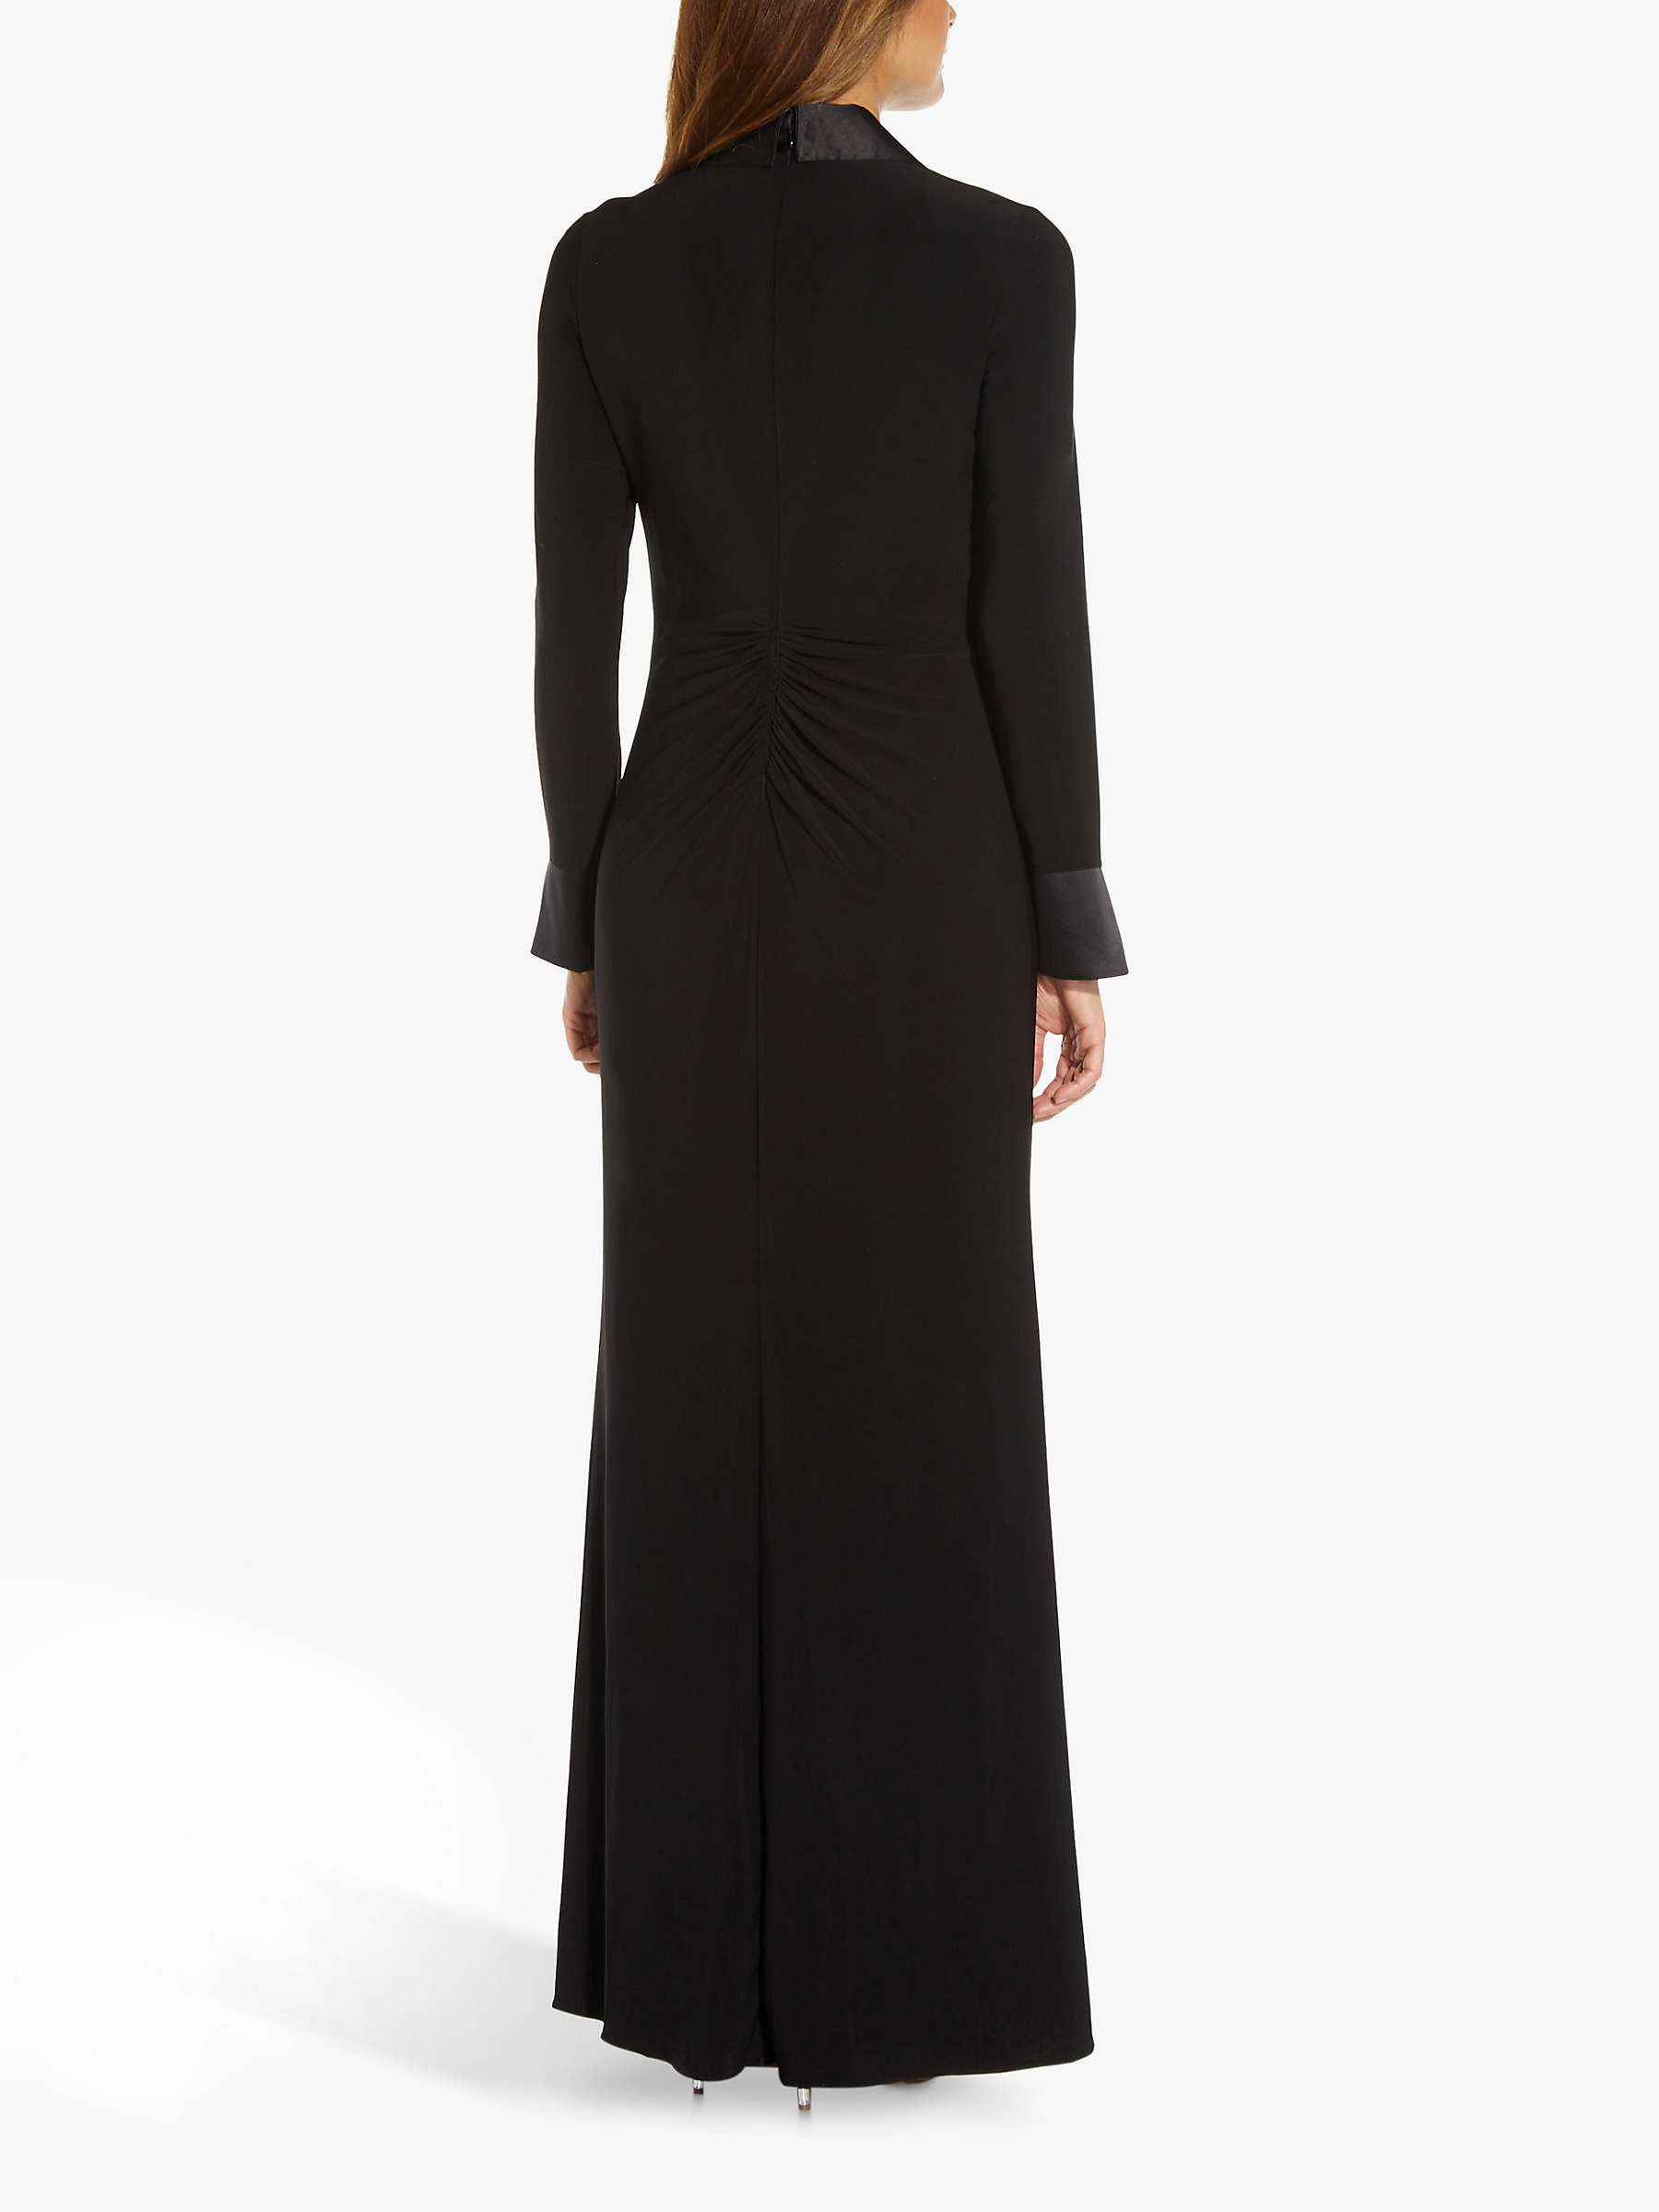 Buy Adrianna Papell Tuxedo Dress, Black Online at johnlewis.com